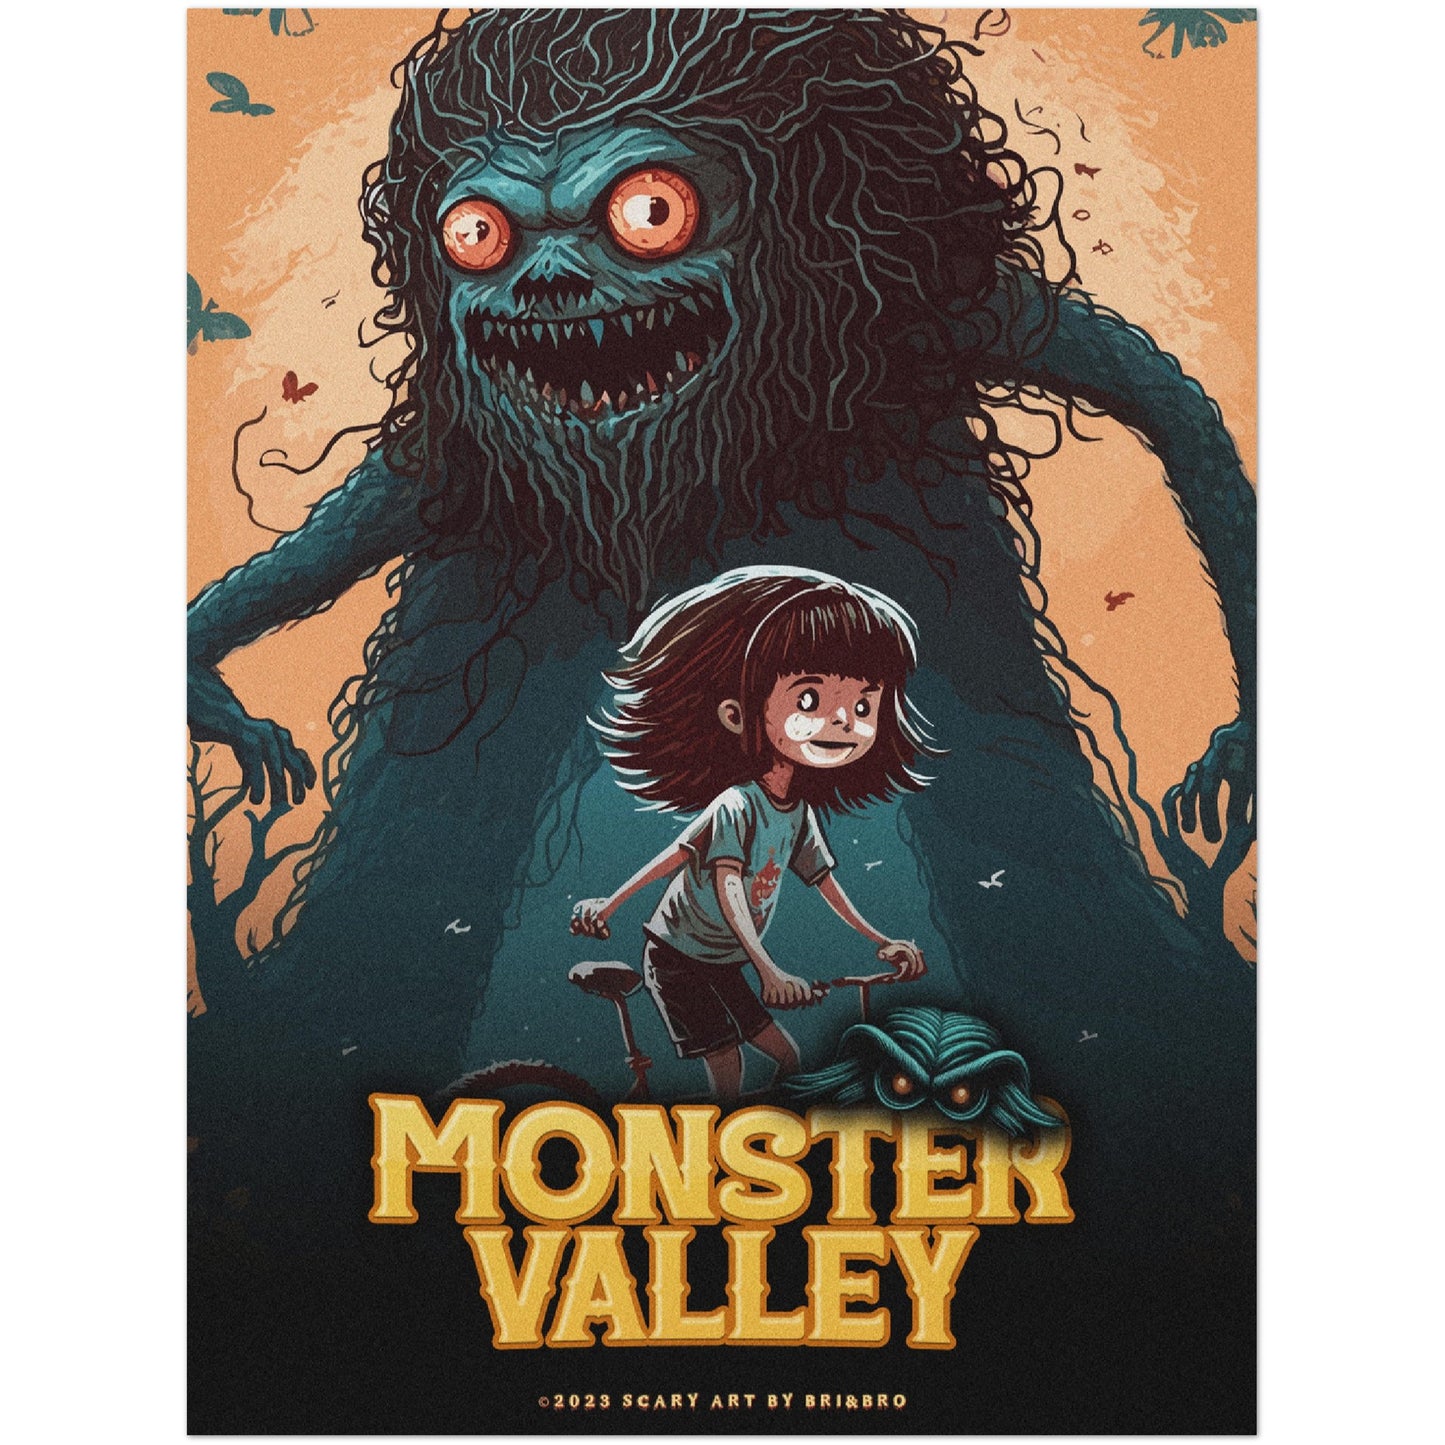 Monster Valley #2